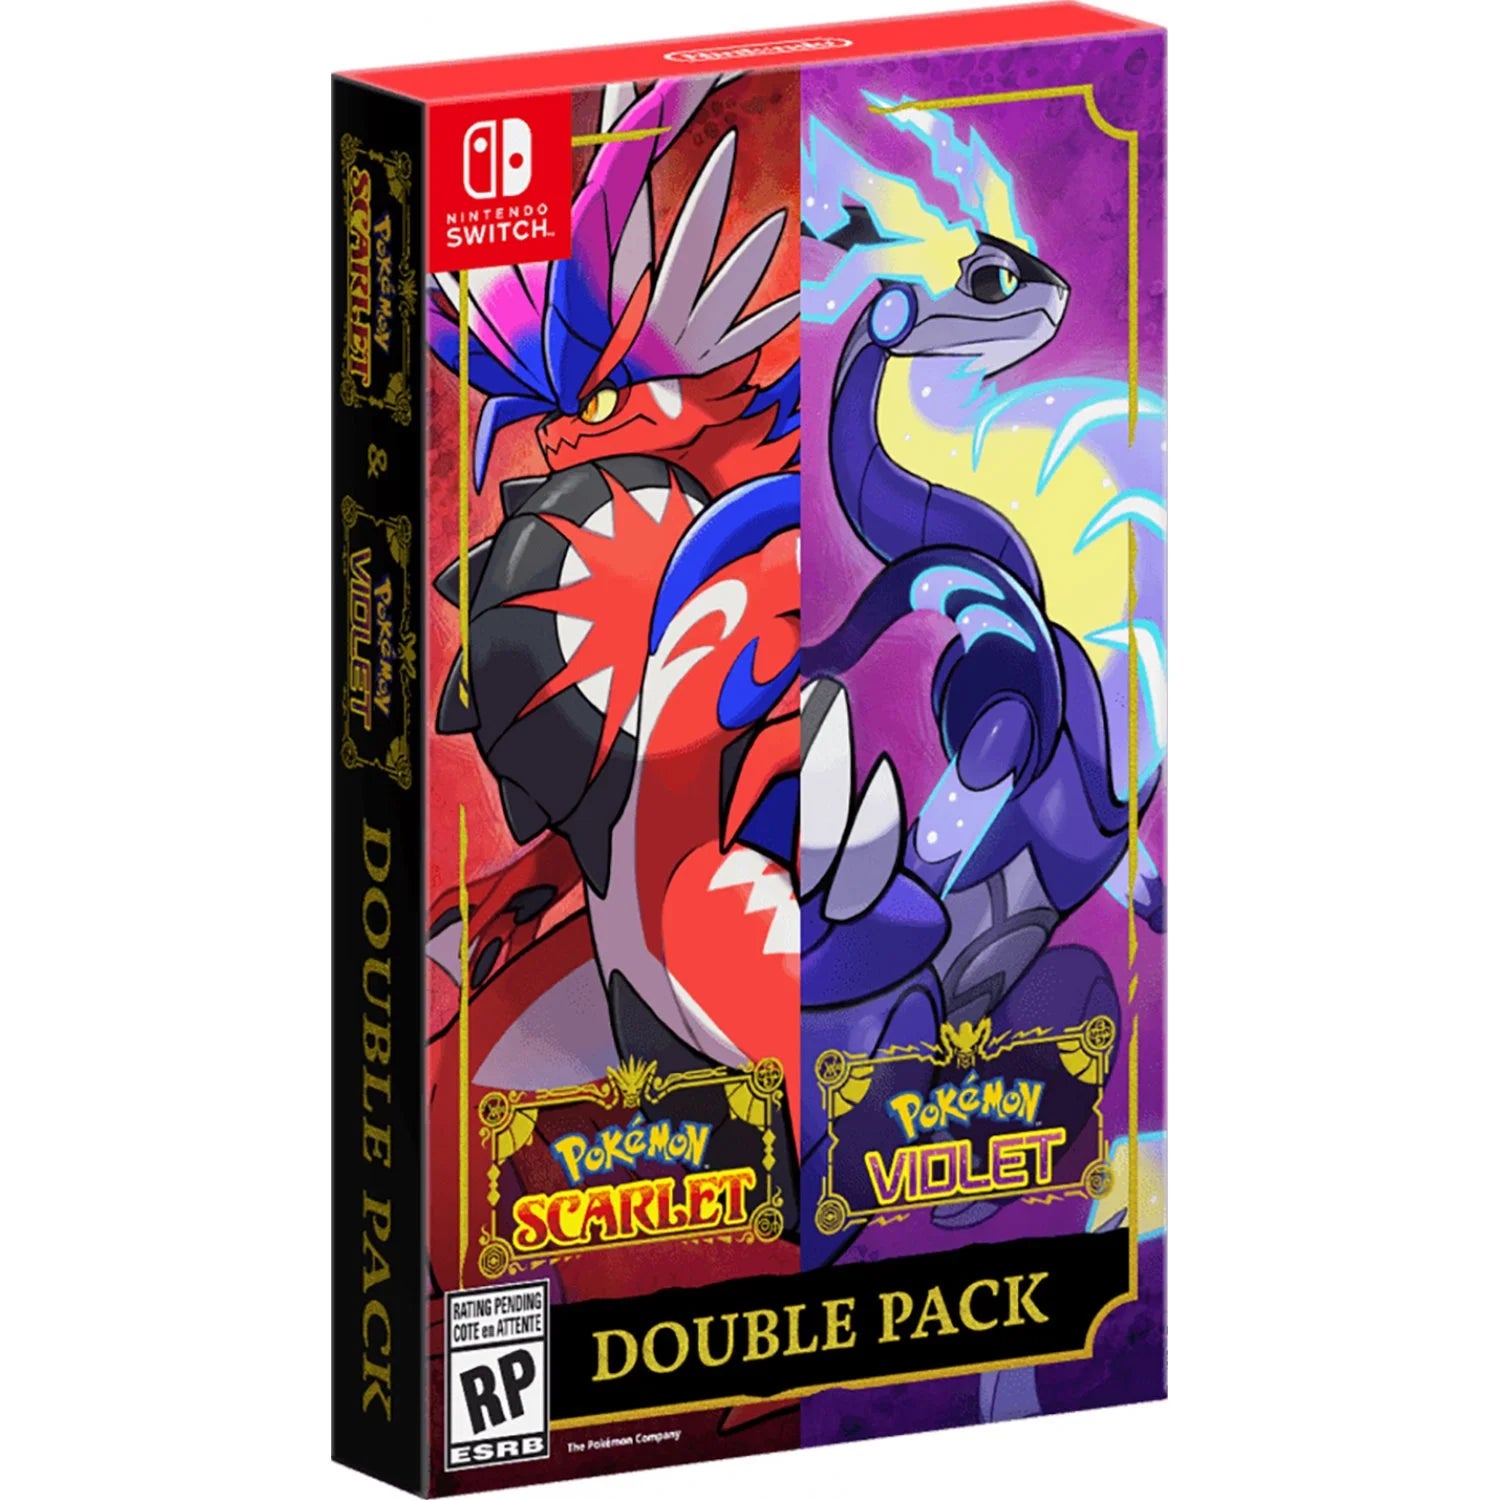 NSW Pokémon Scarlet & Violet Double Pack